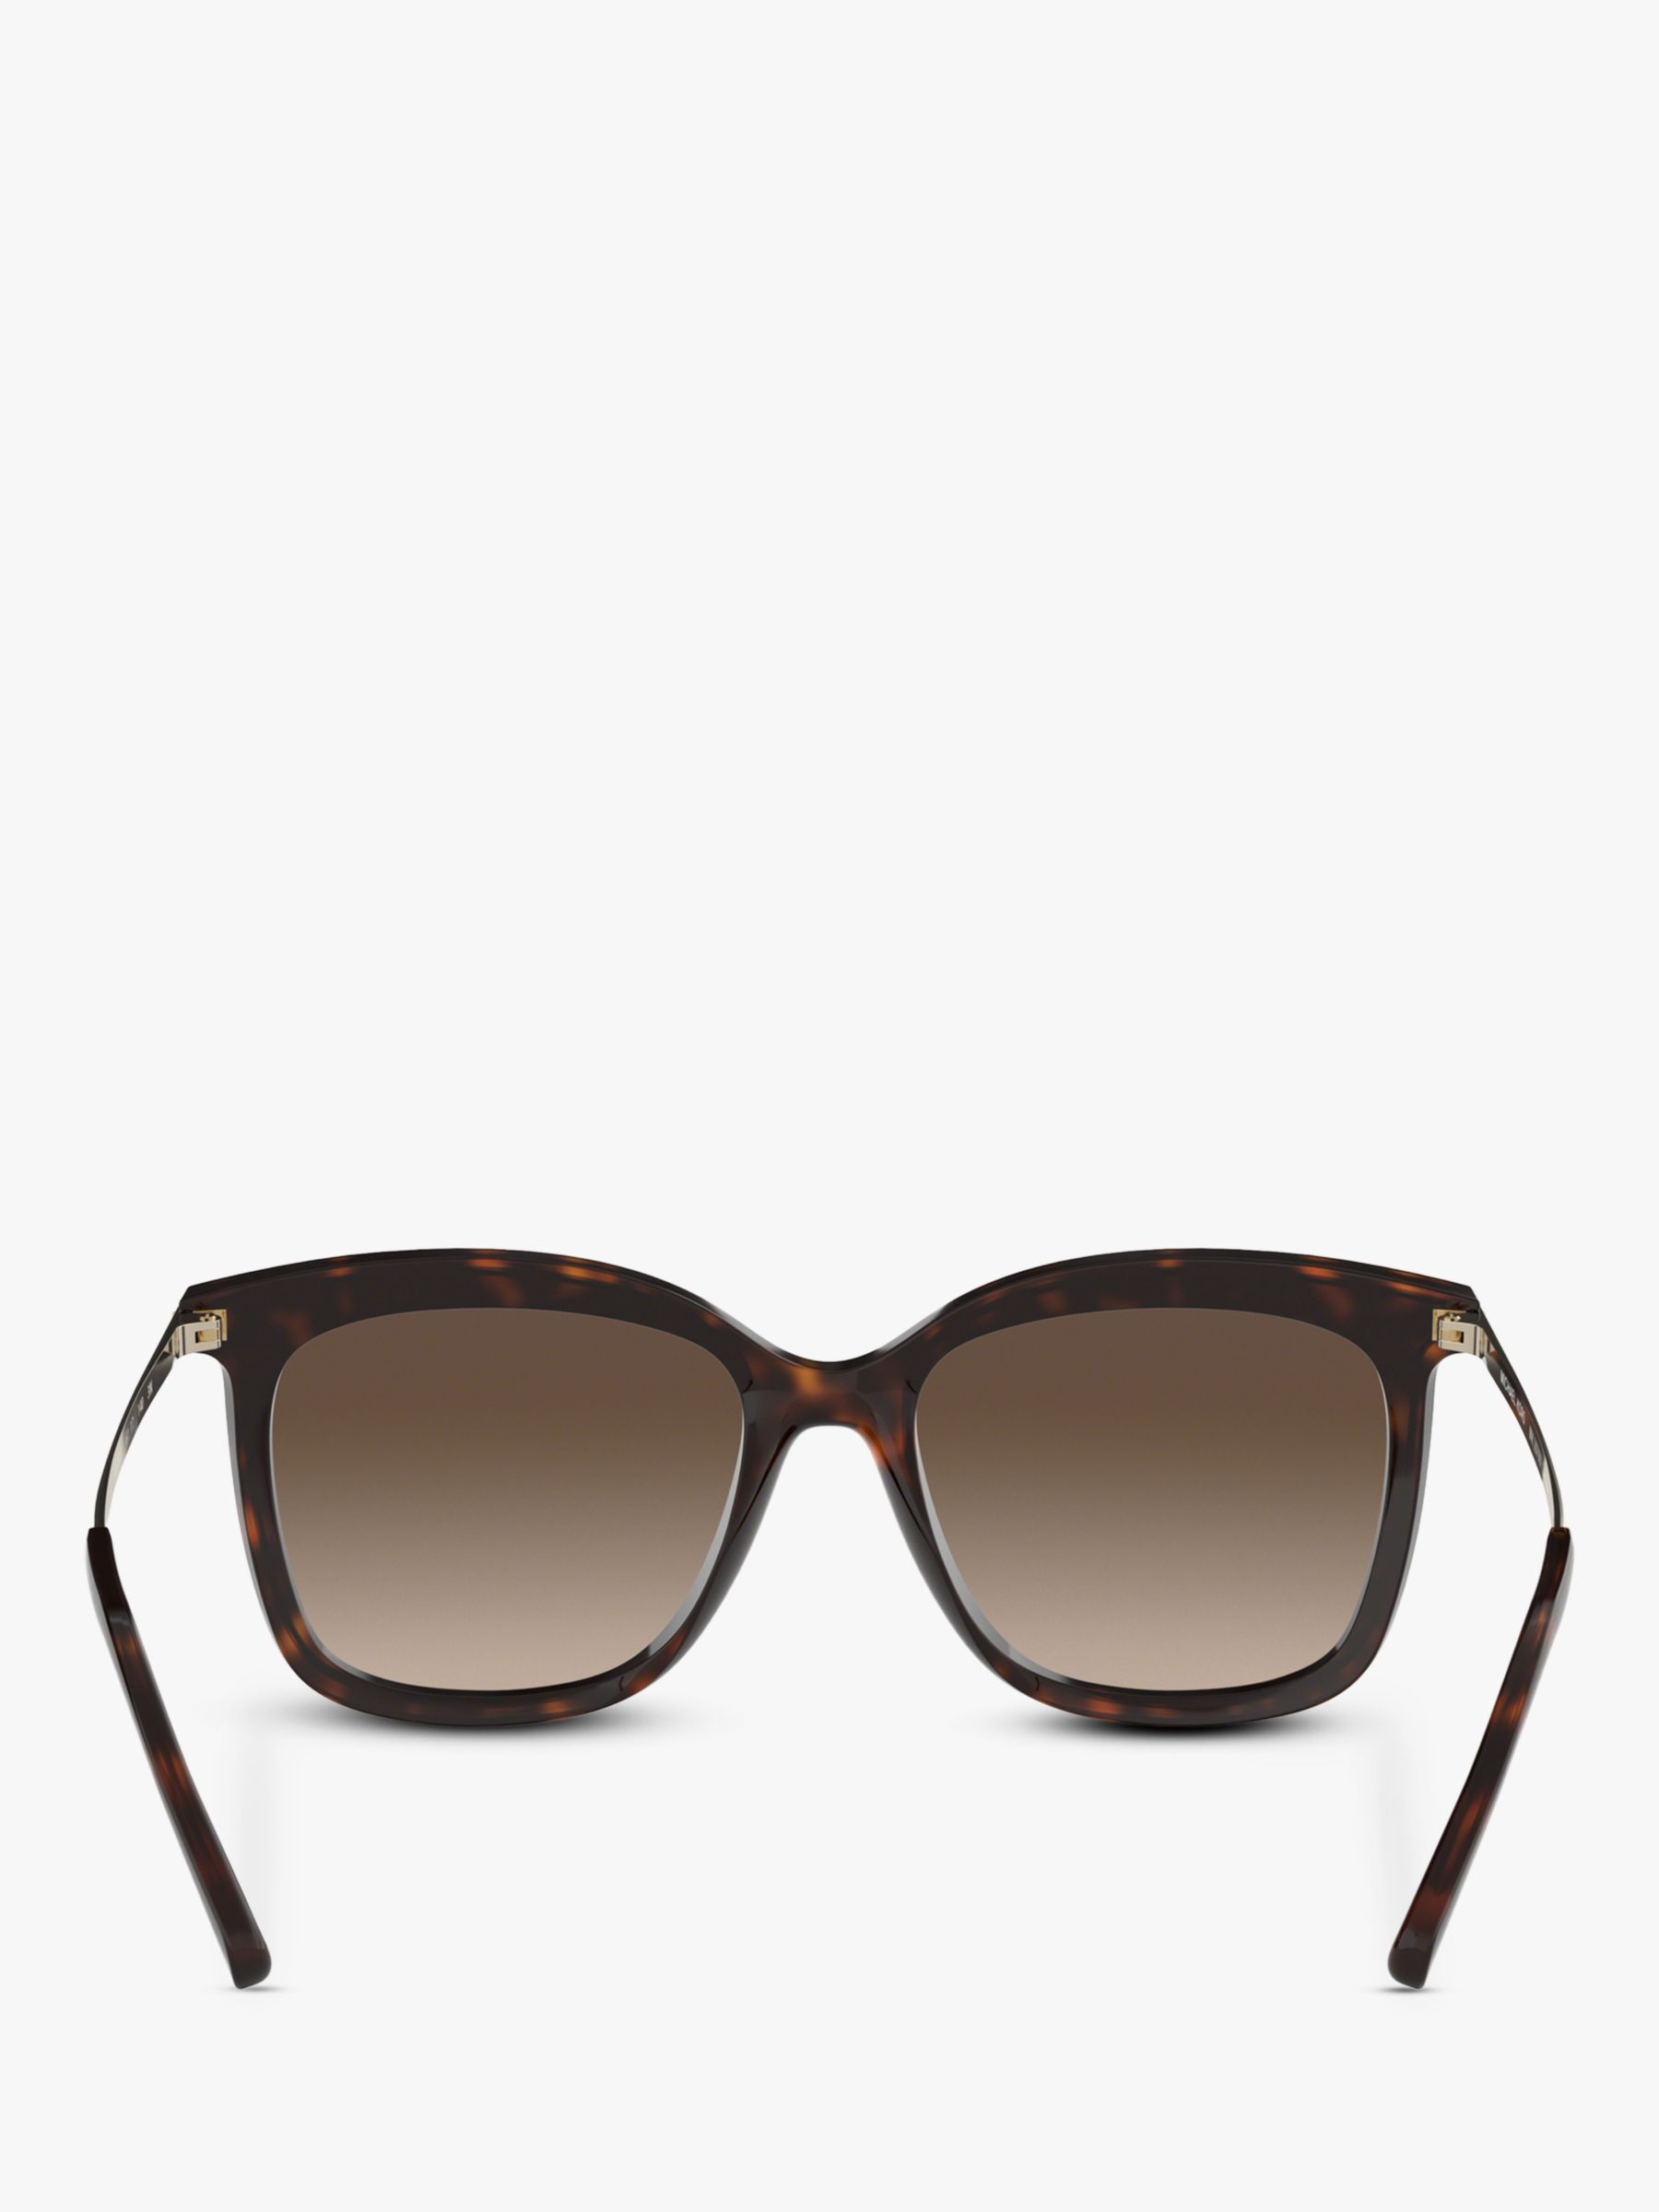 Michael Kors MK2079U Women's Zermatt Square Sunglasses, Dark Tortoise/Brown Gradient